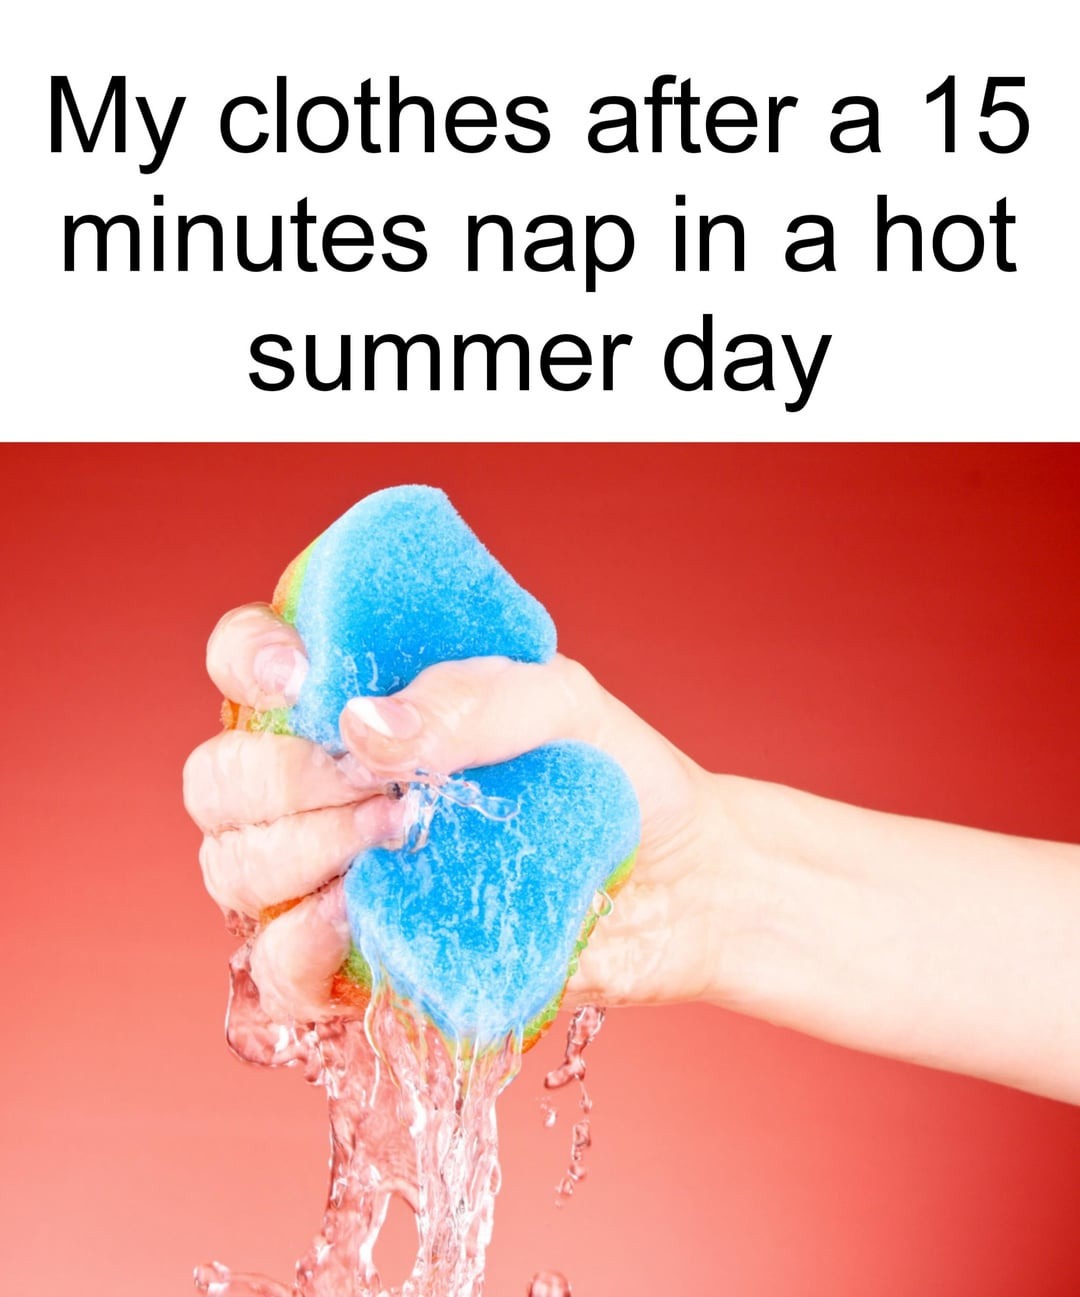 Nap in a hot summer day - meme